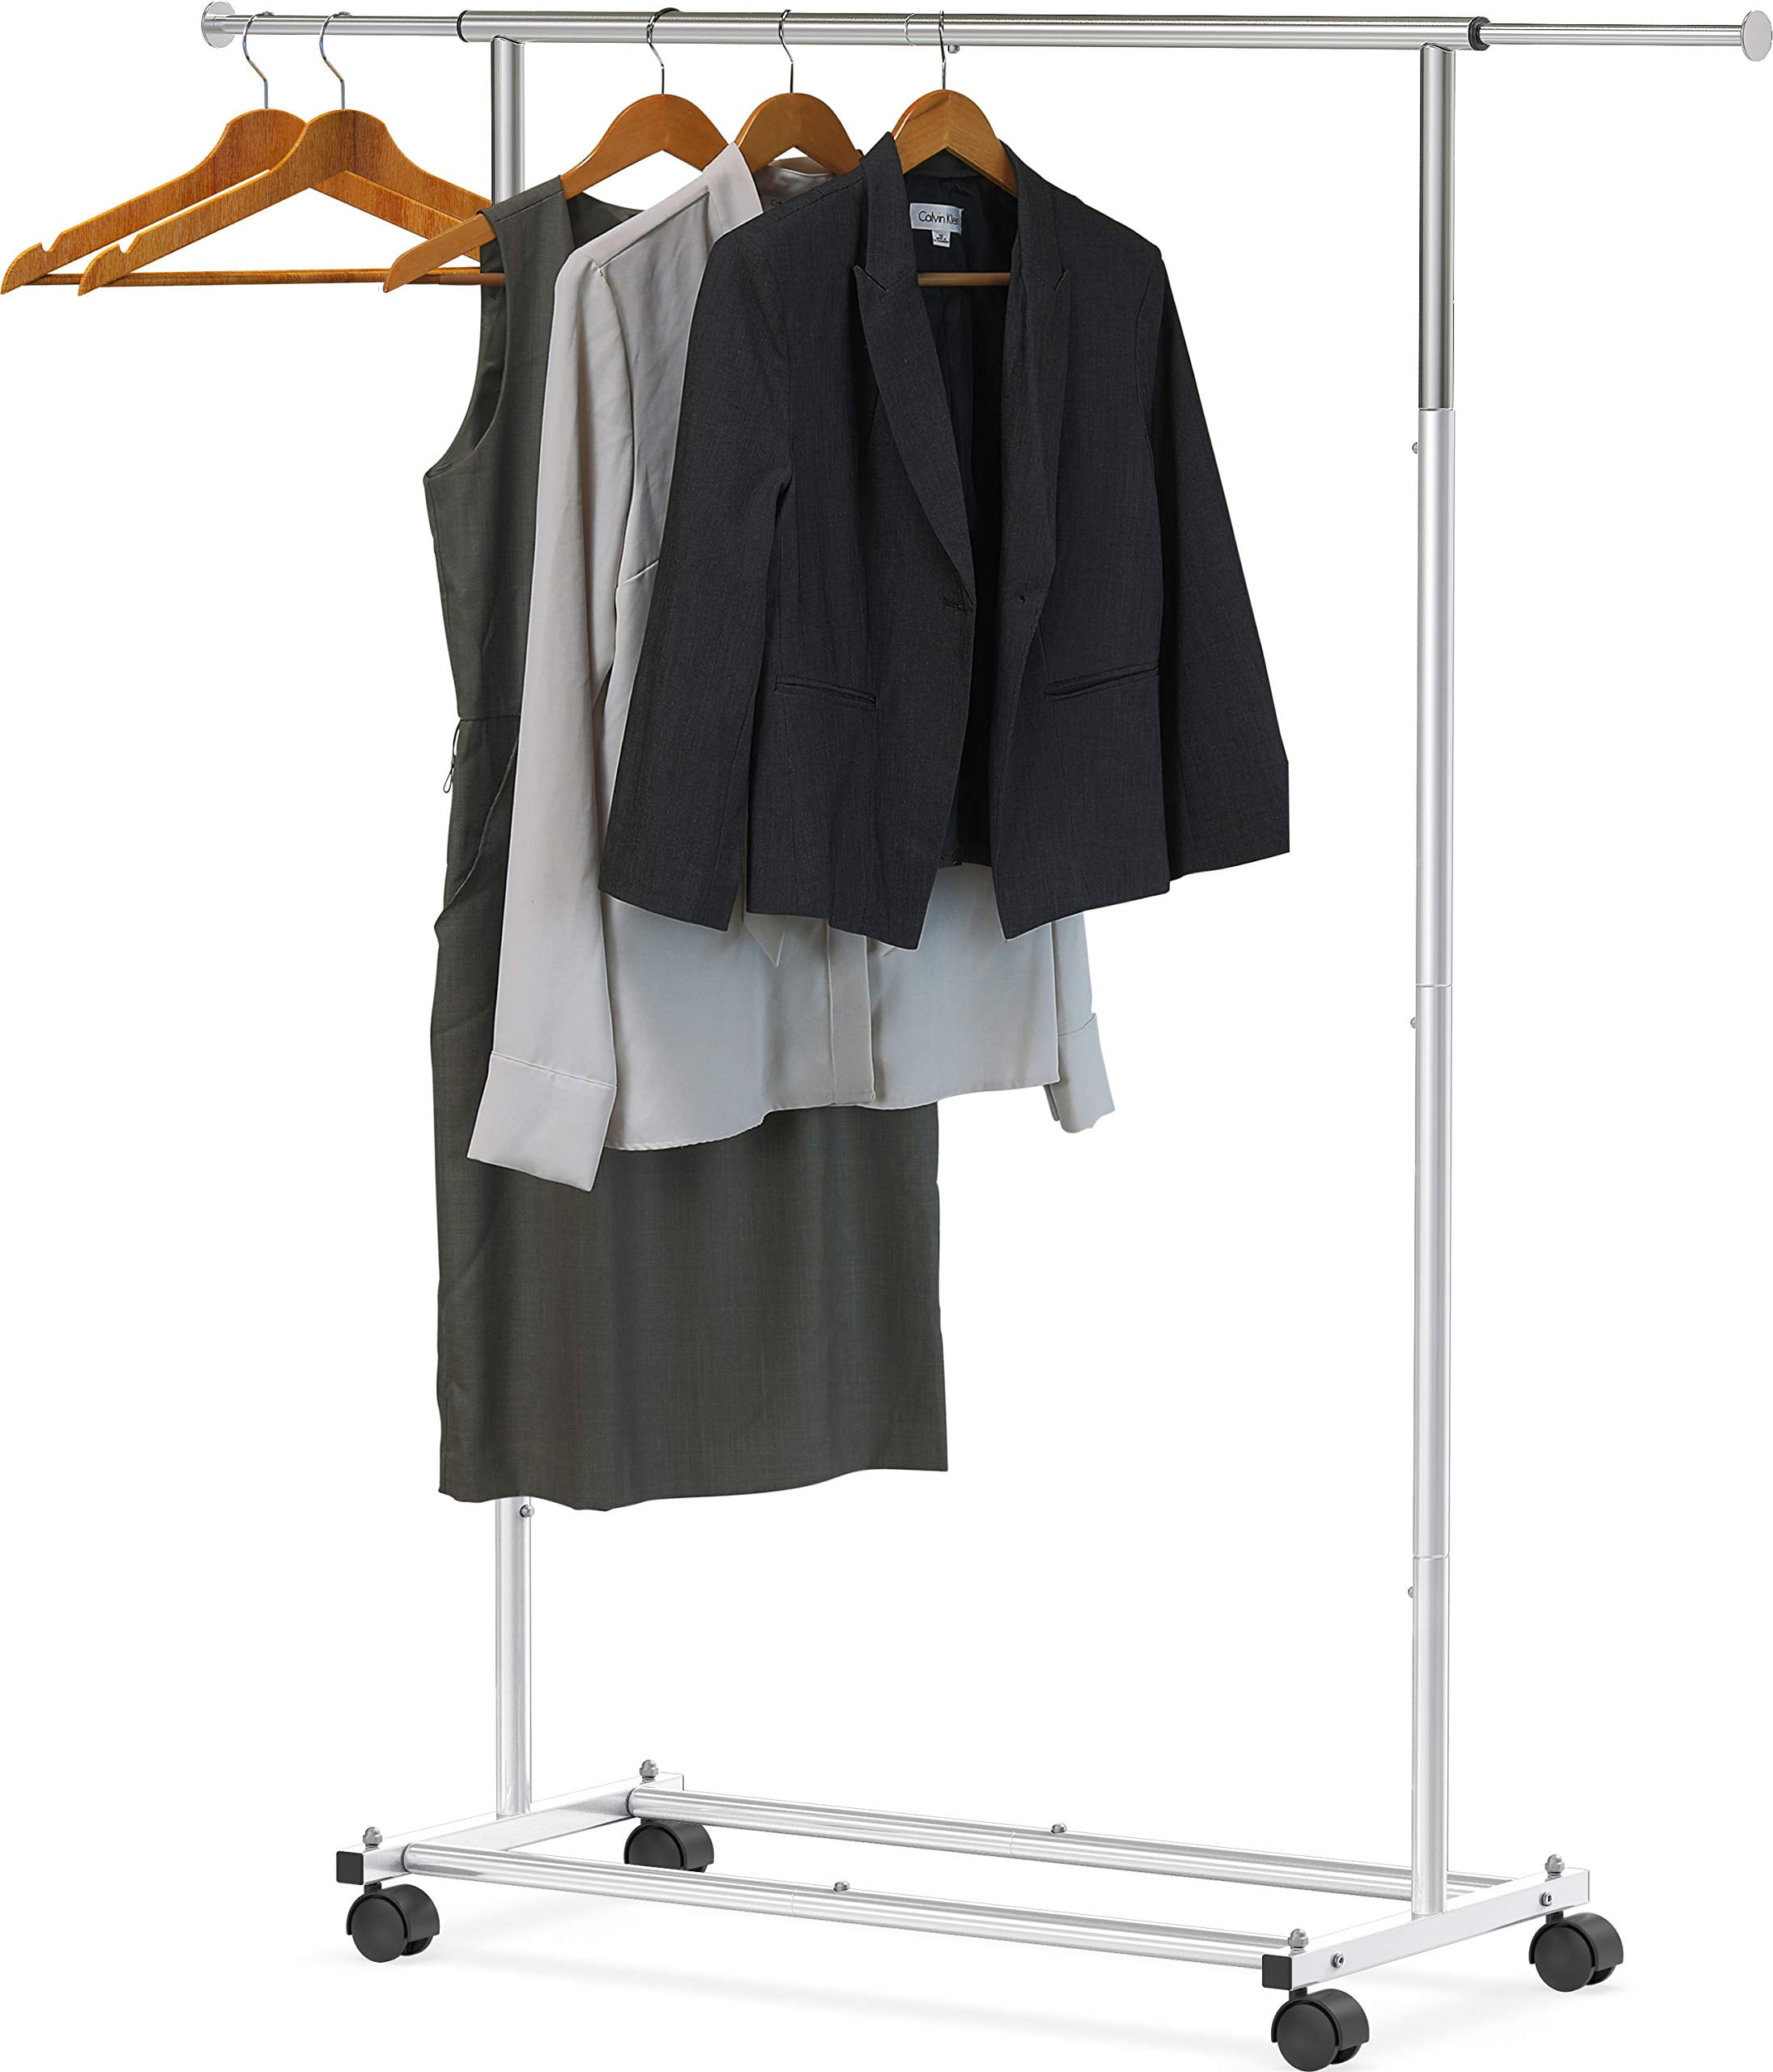 Simple Houseware Heavy Duty Double Rail Clothing Garment Rack